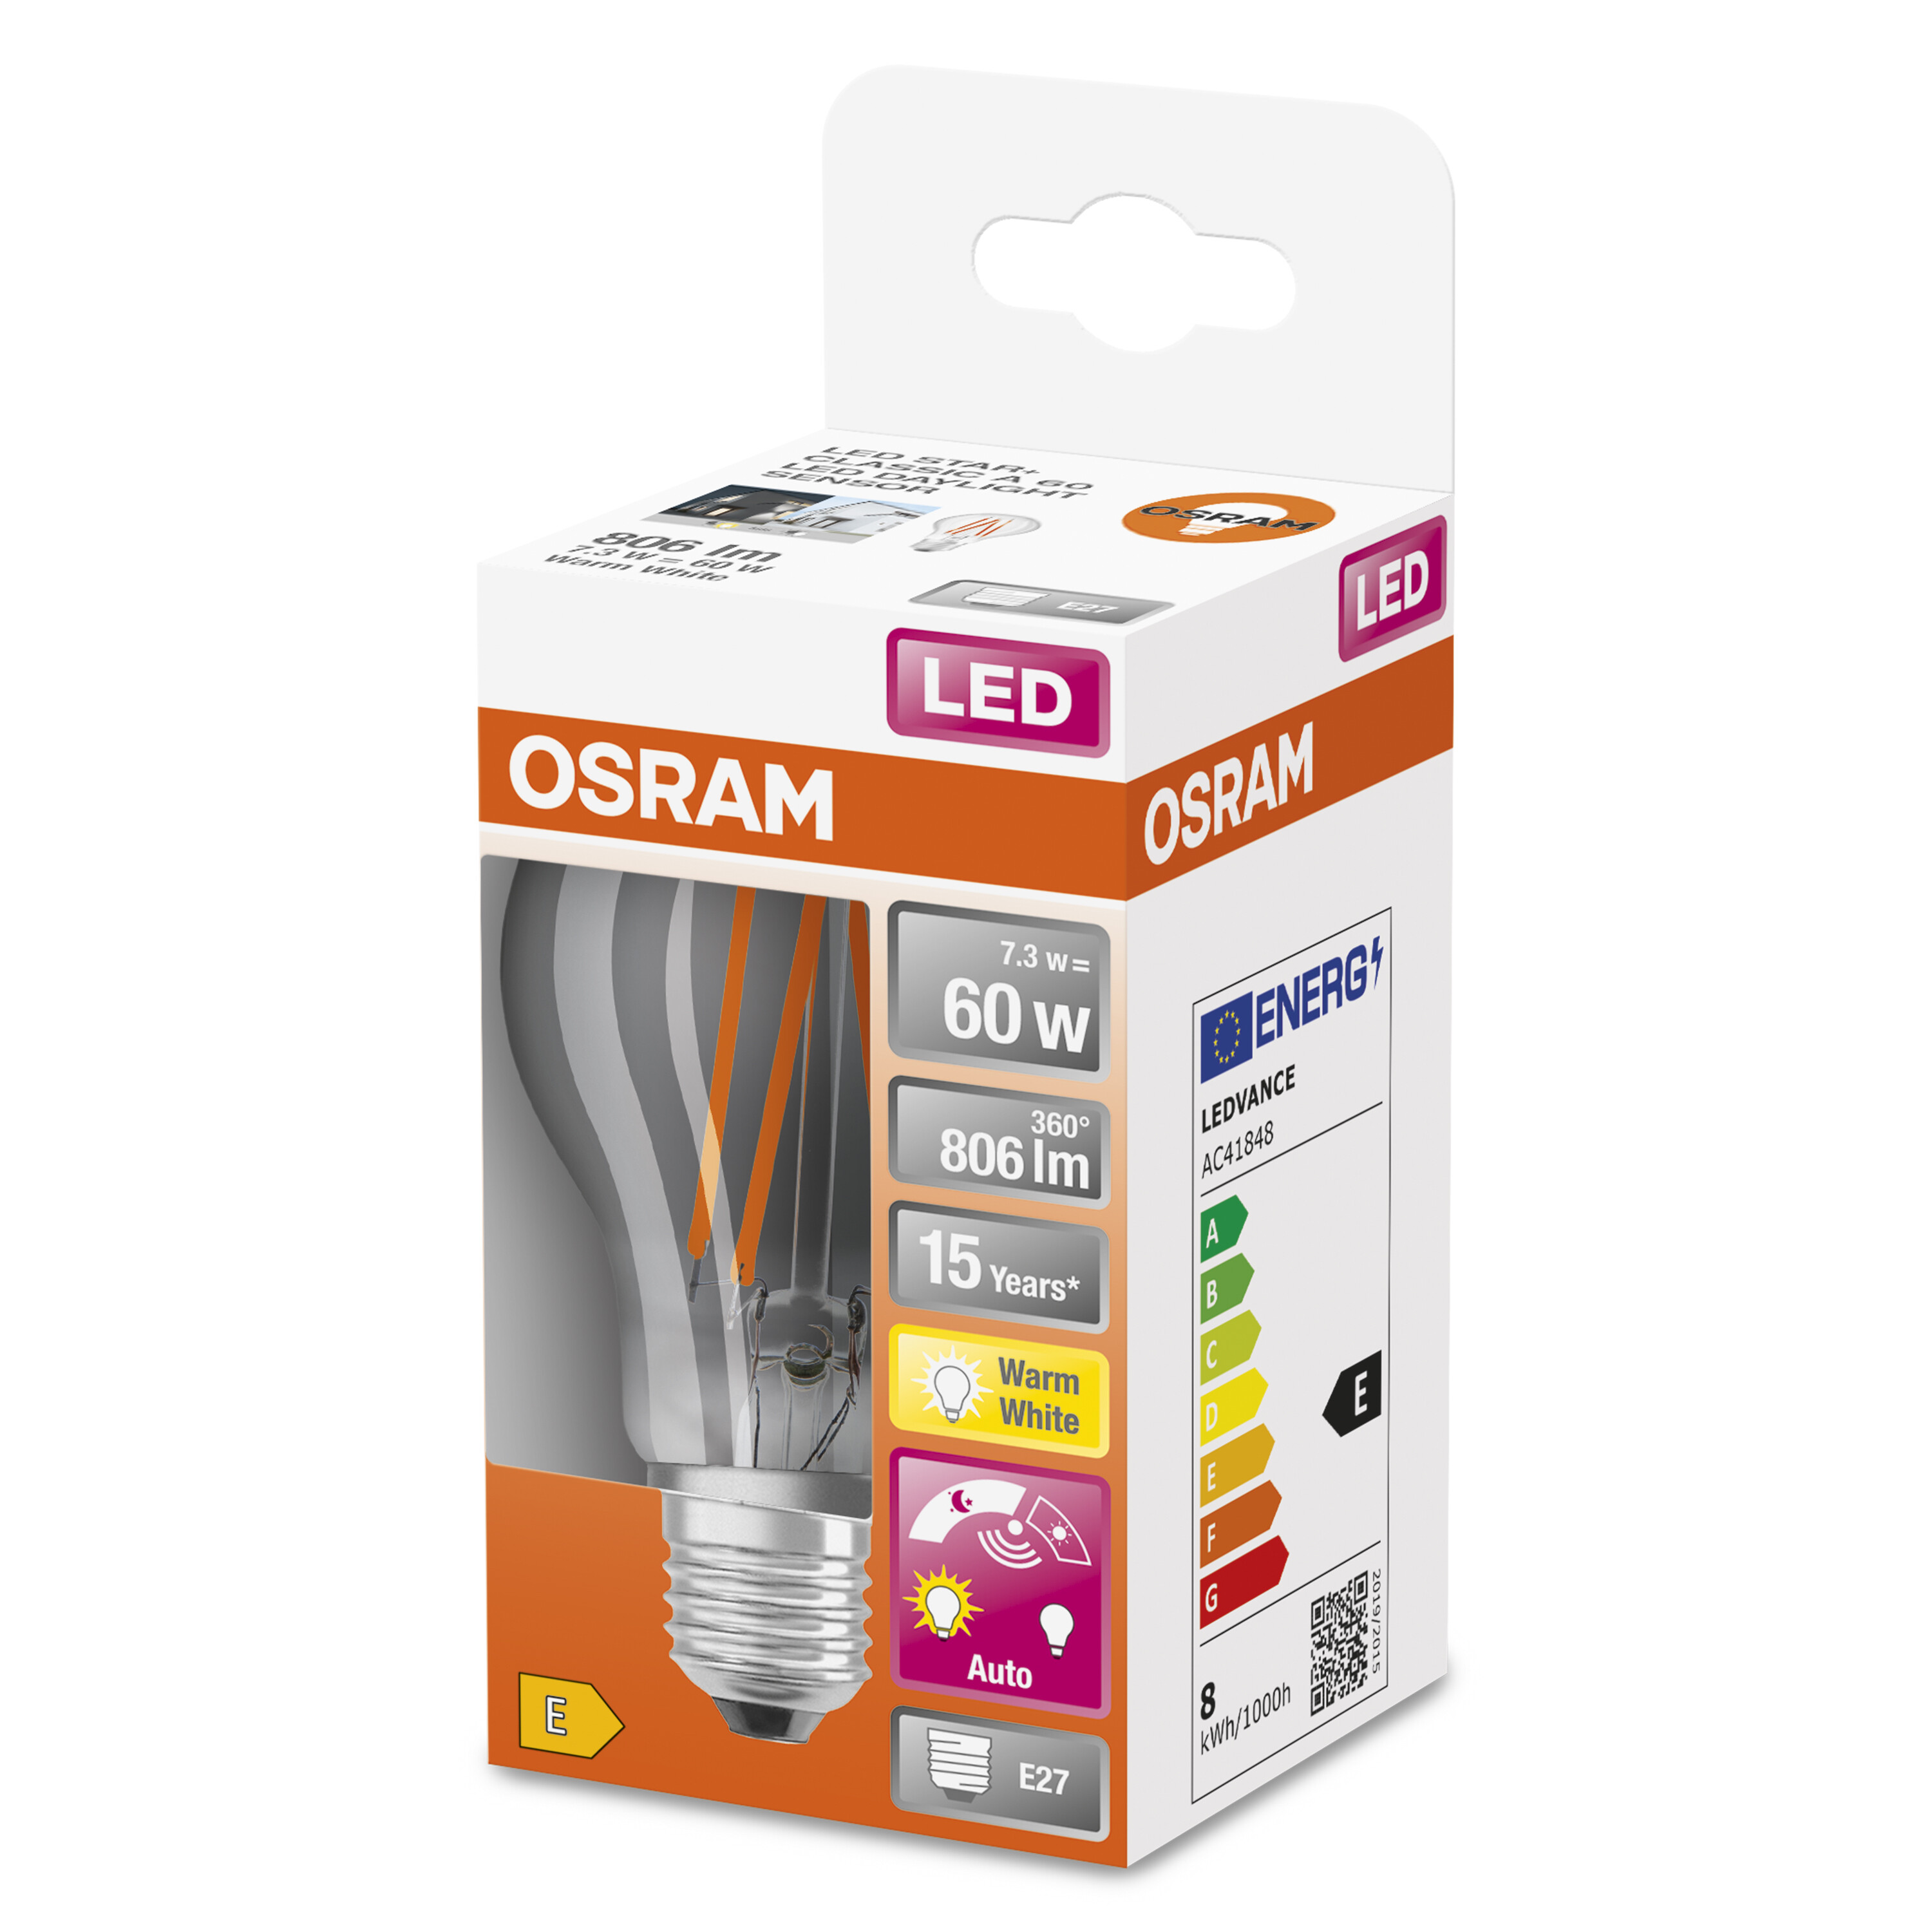 OSRAM  LED DAYLIGHT Lumen Warmweiß Lampe LED A CLASSIC 806 SENSOR